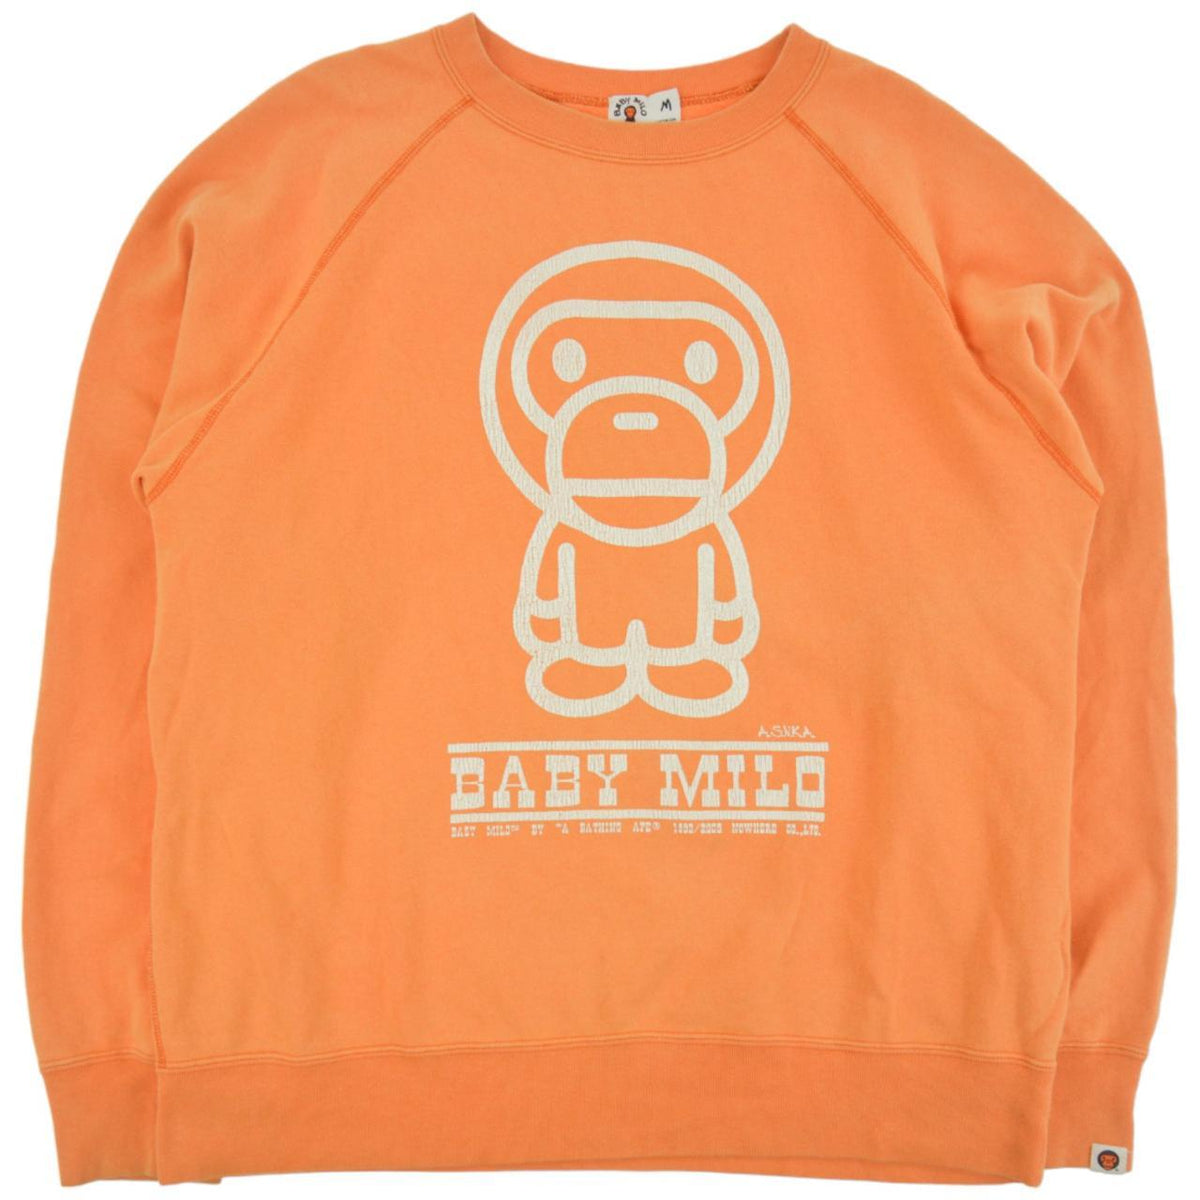 Vintage BAPE Baby Milo Sweatshirt Size M